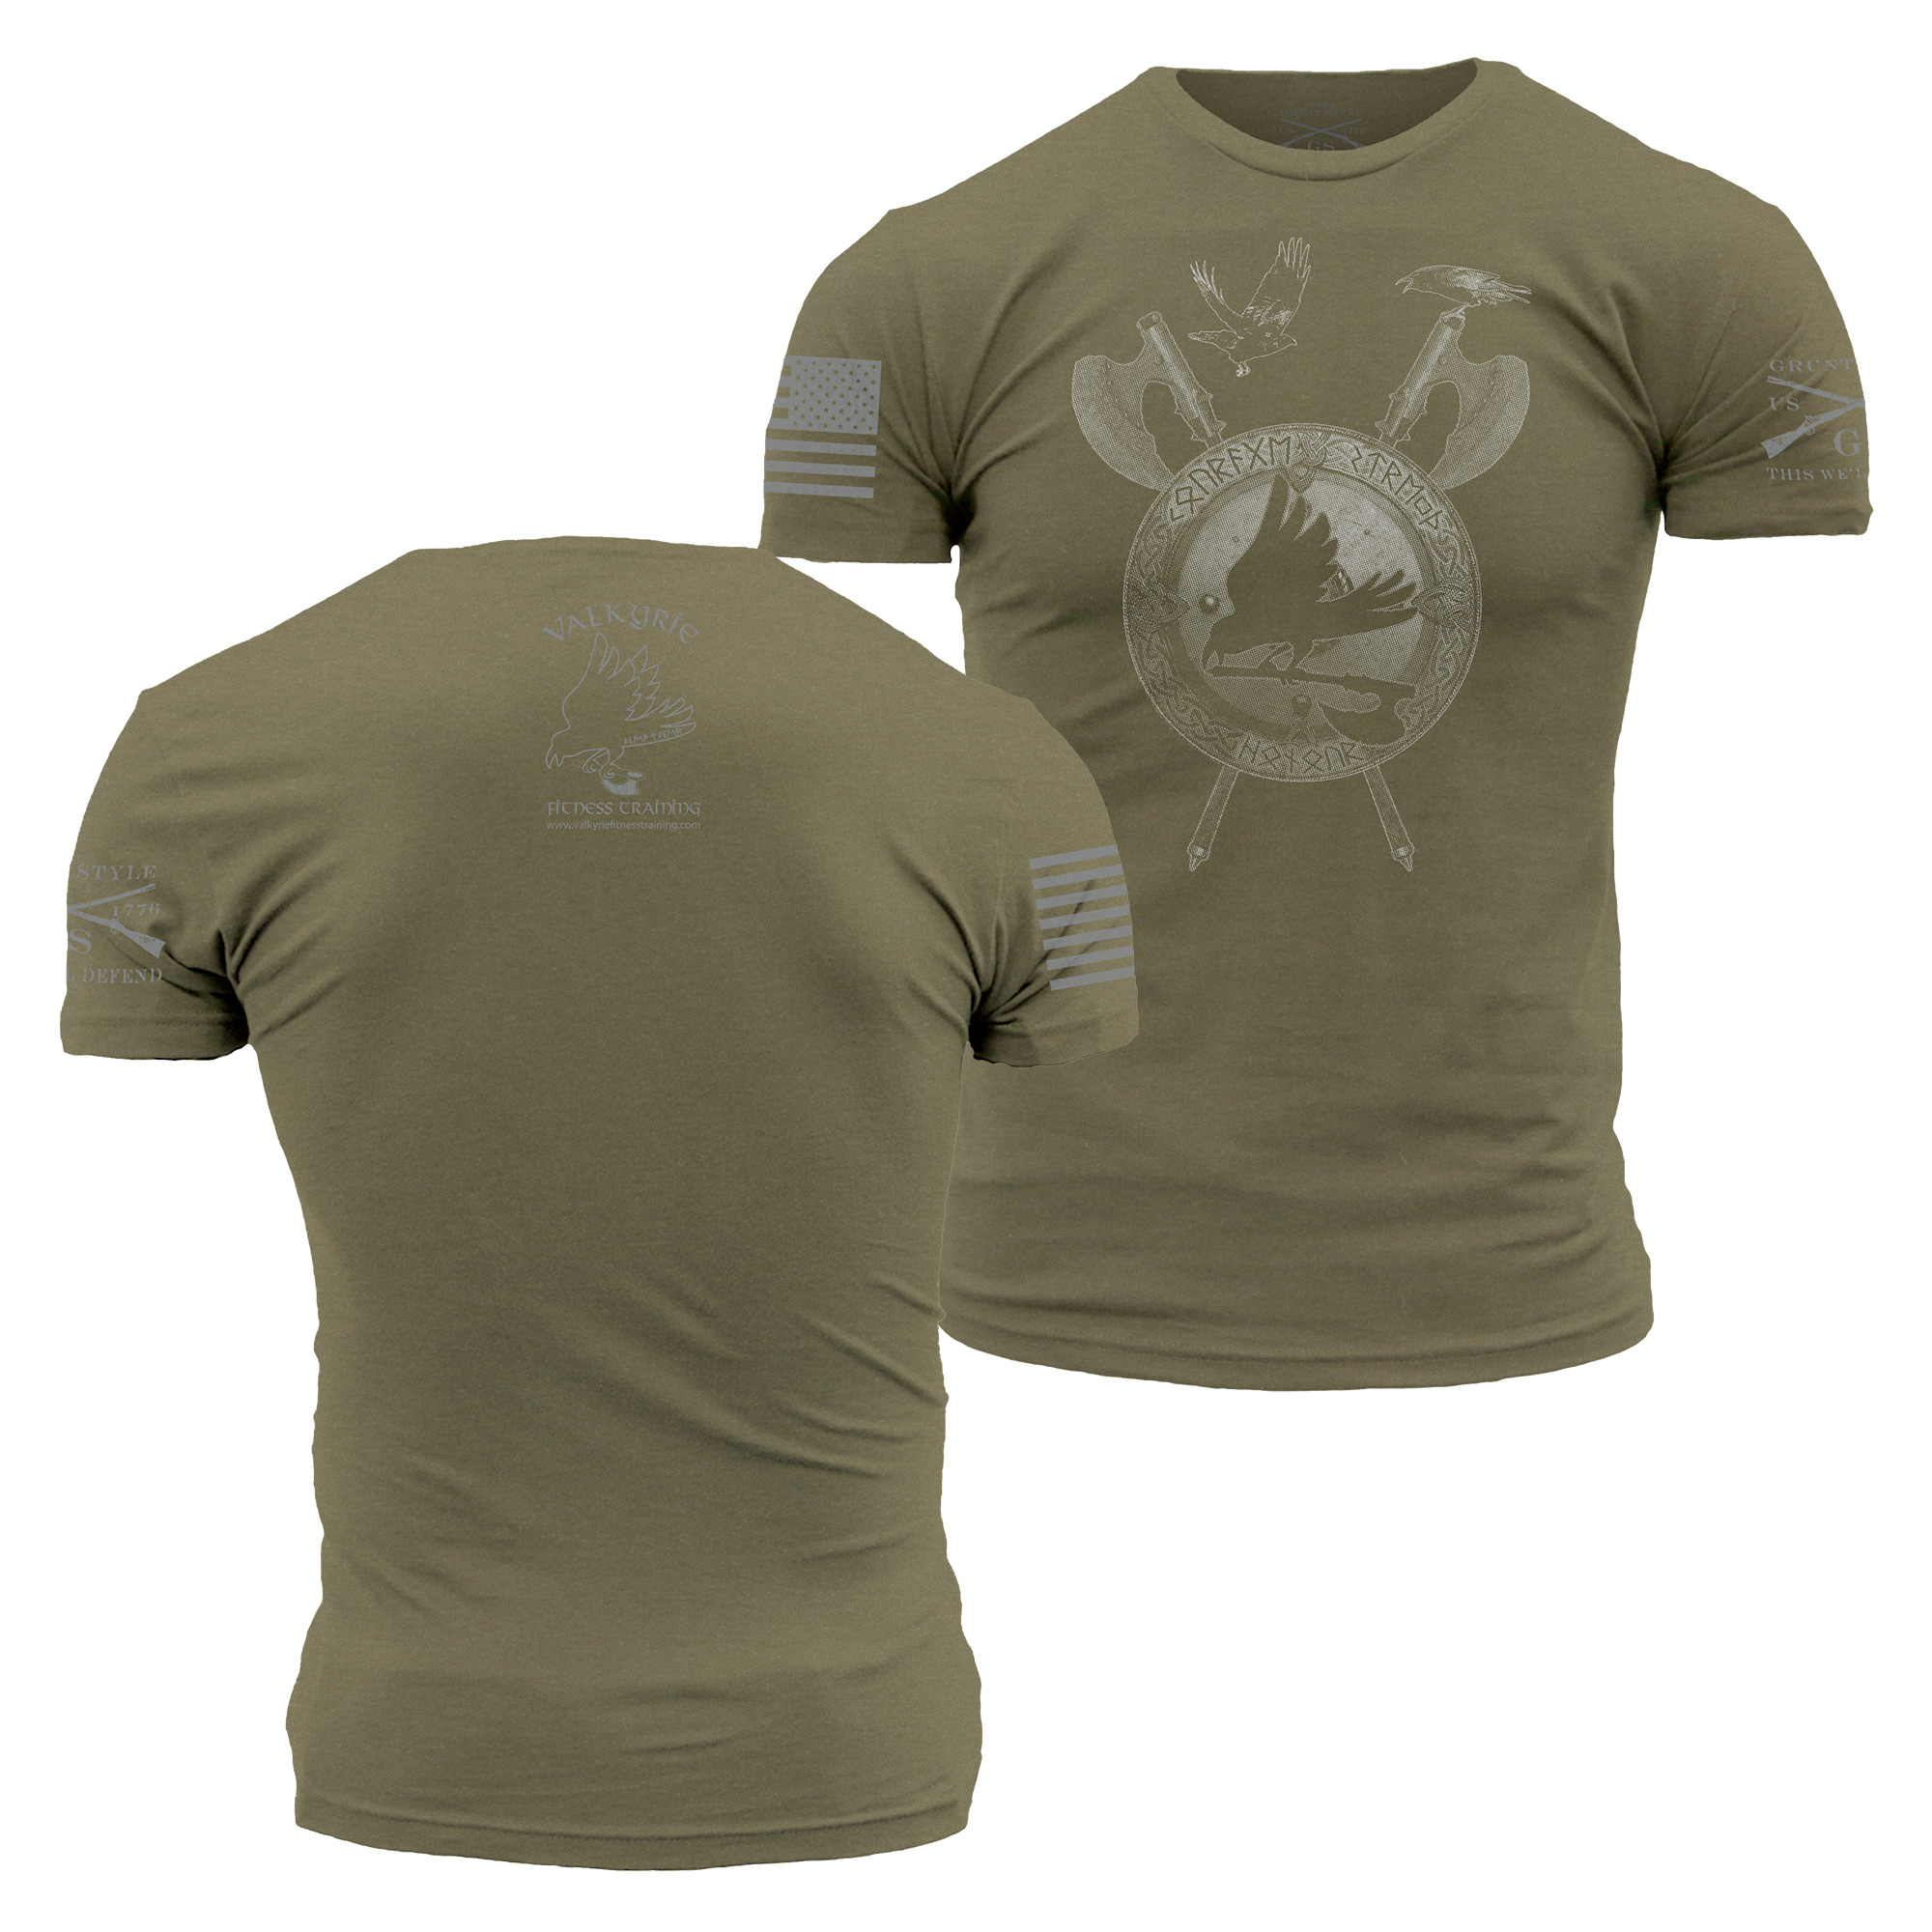 Gruntstyle t-shirt – Valkyrie Fitness Training – Green – Men